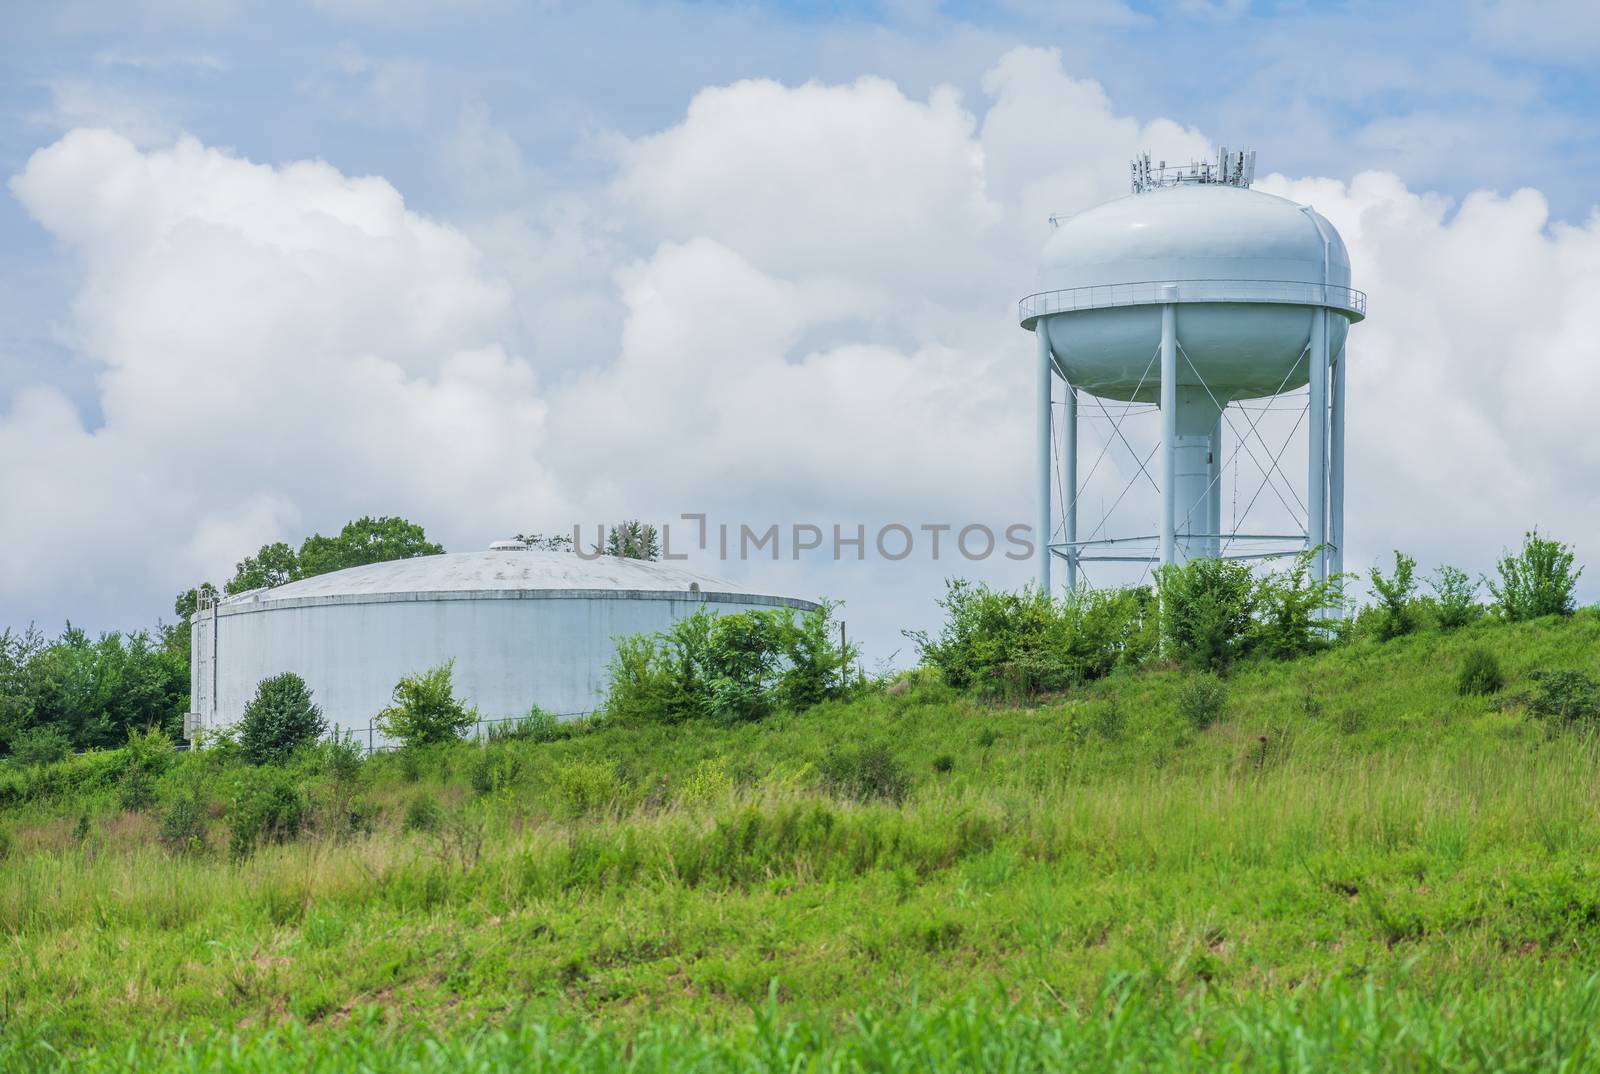 Municipal Water Tower by stockbuster1